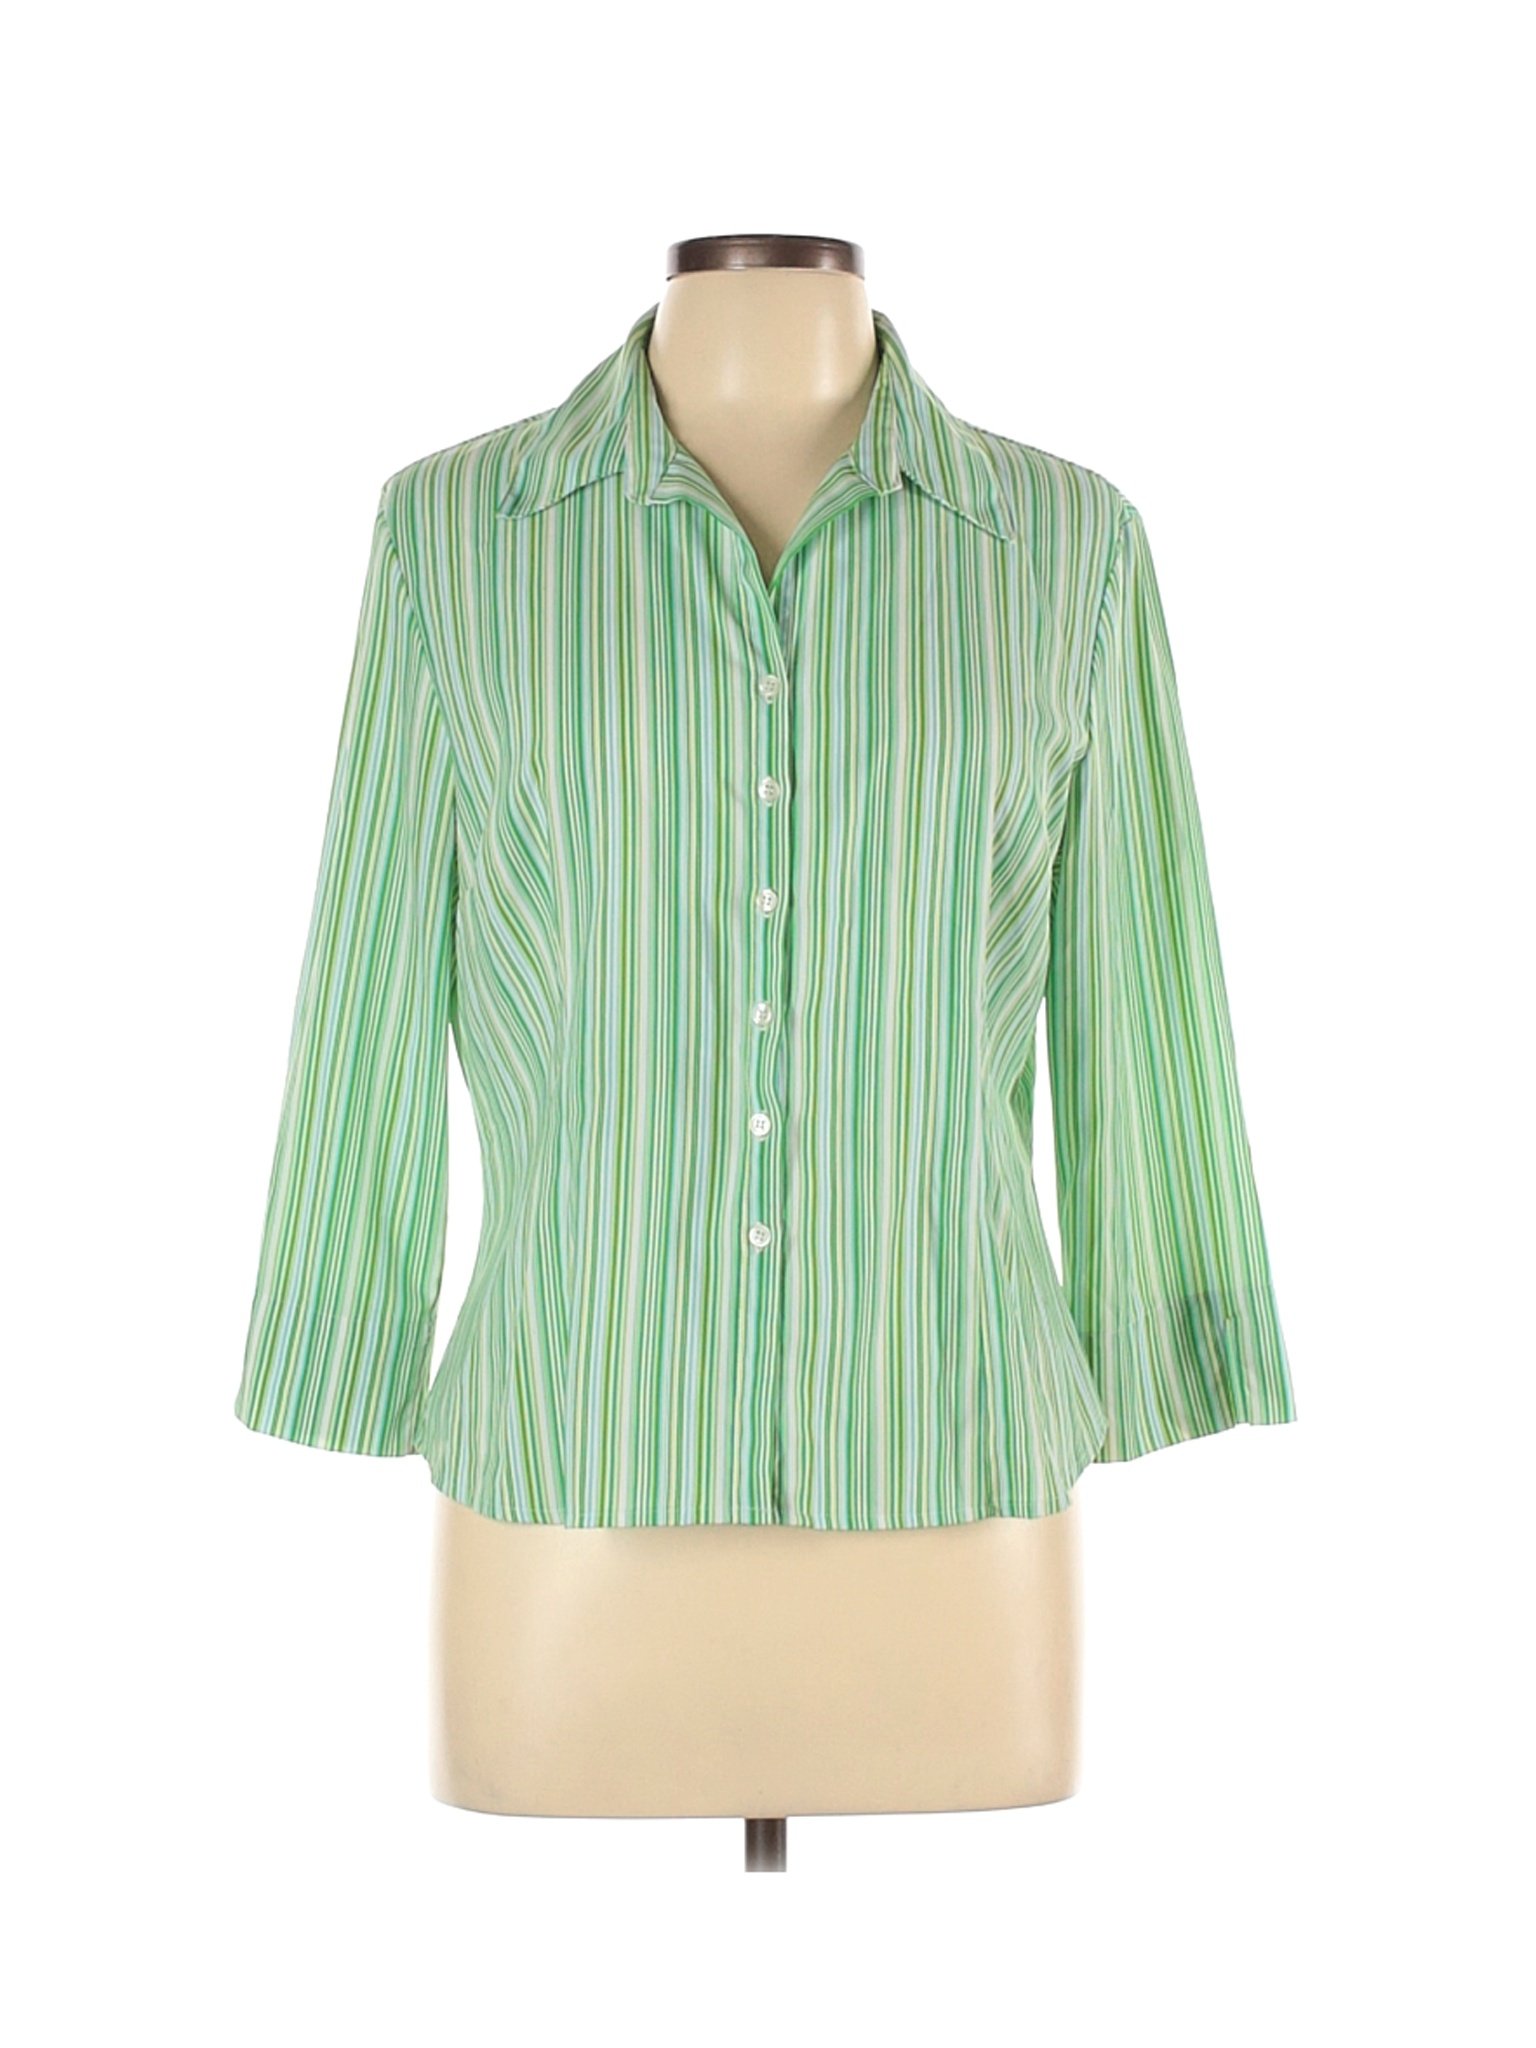 Fred David Women Green Long Sleeve Blouse L | eBay